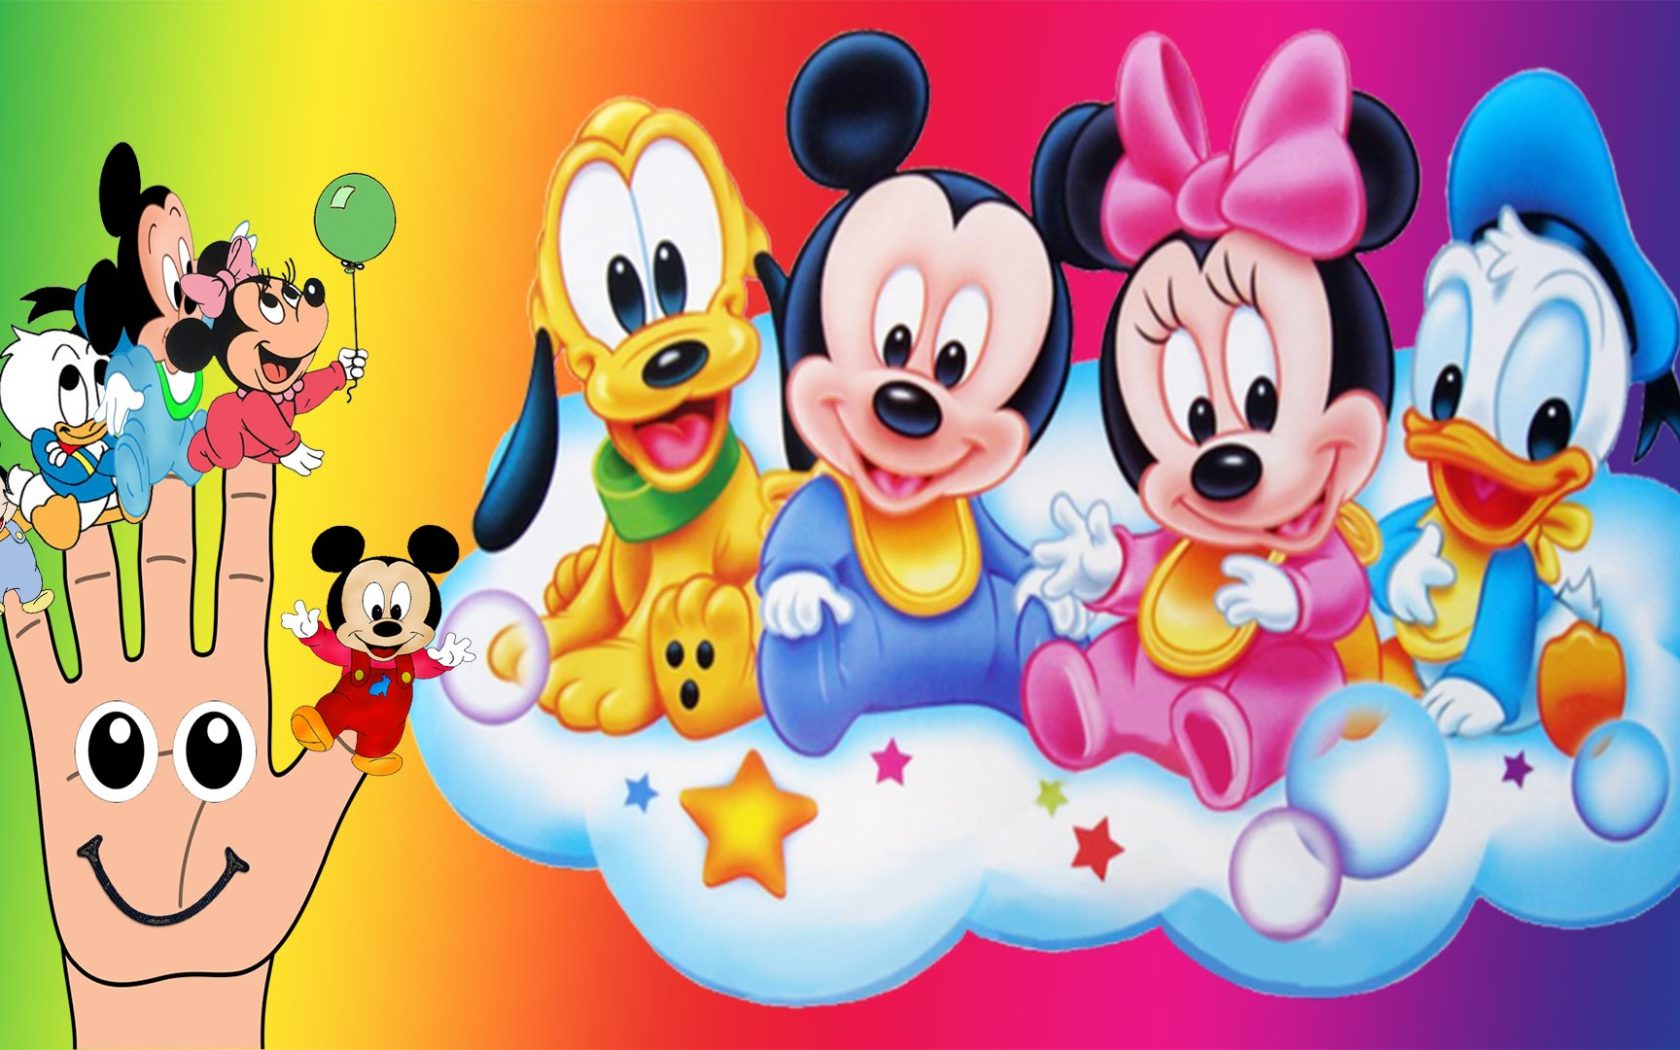 Adorable baby mickey mouse pluto minnie donald duck desktop wallpaper hd